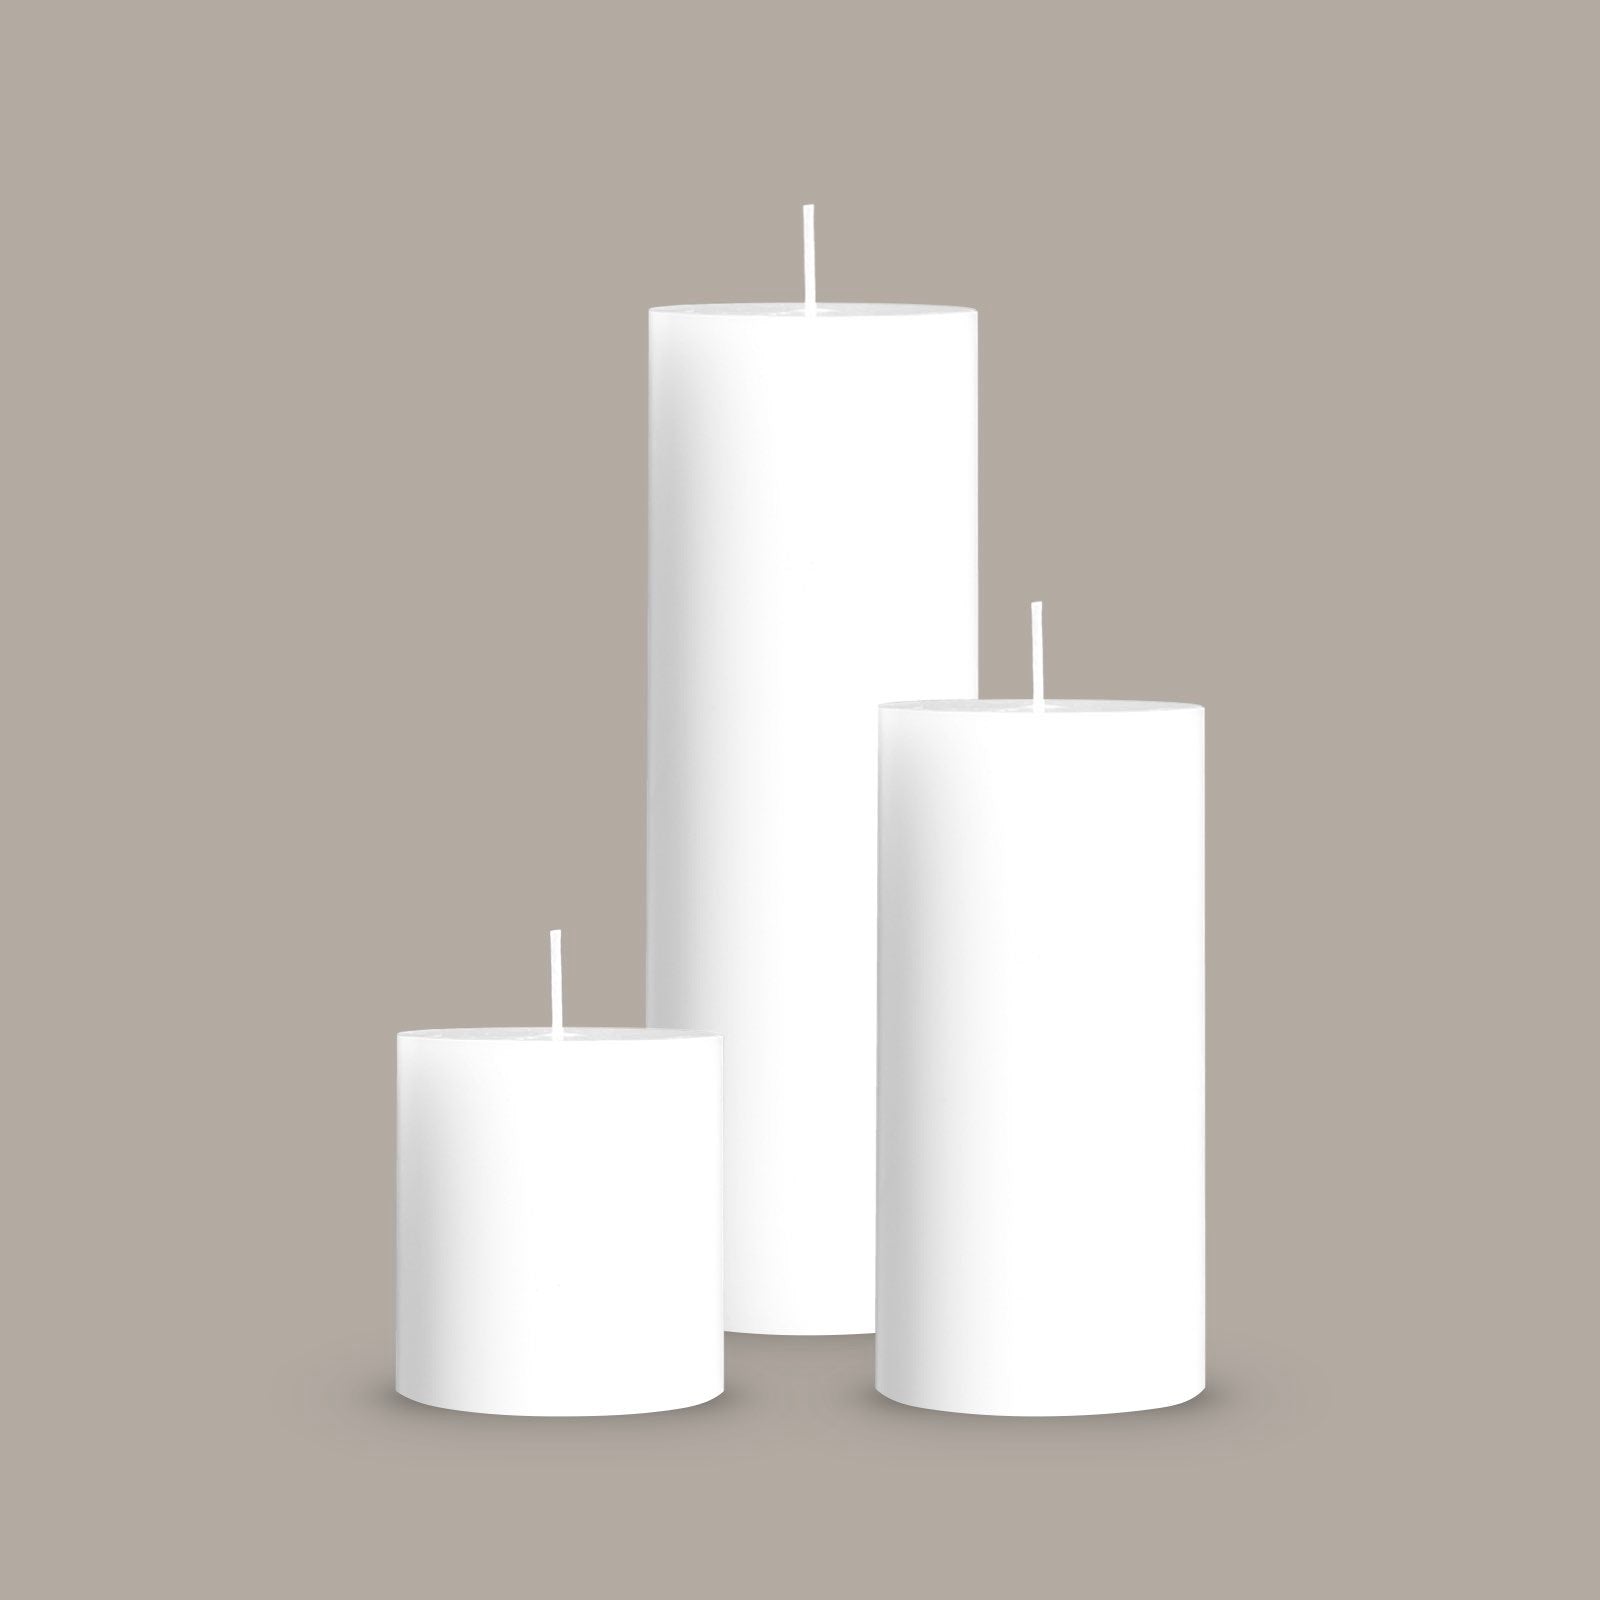 White pillar candles